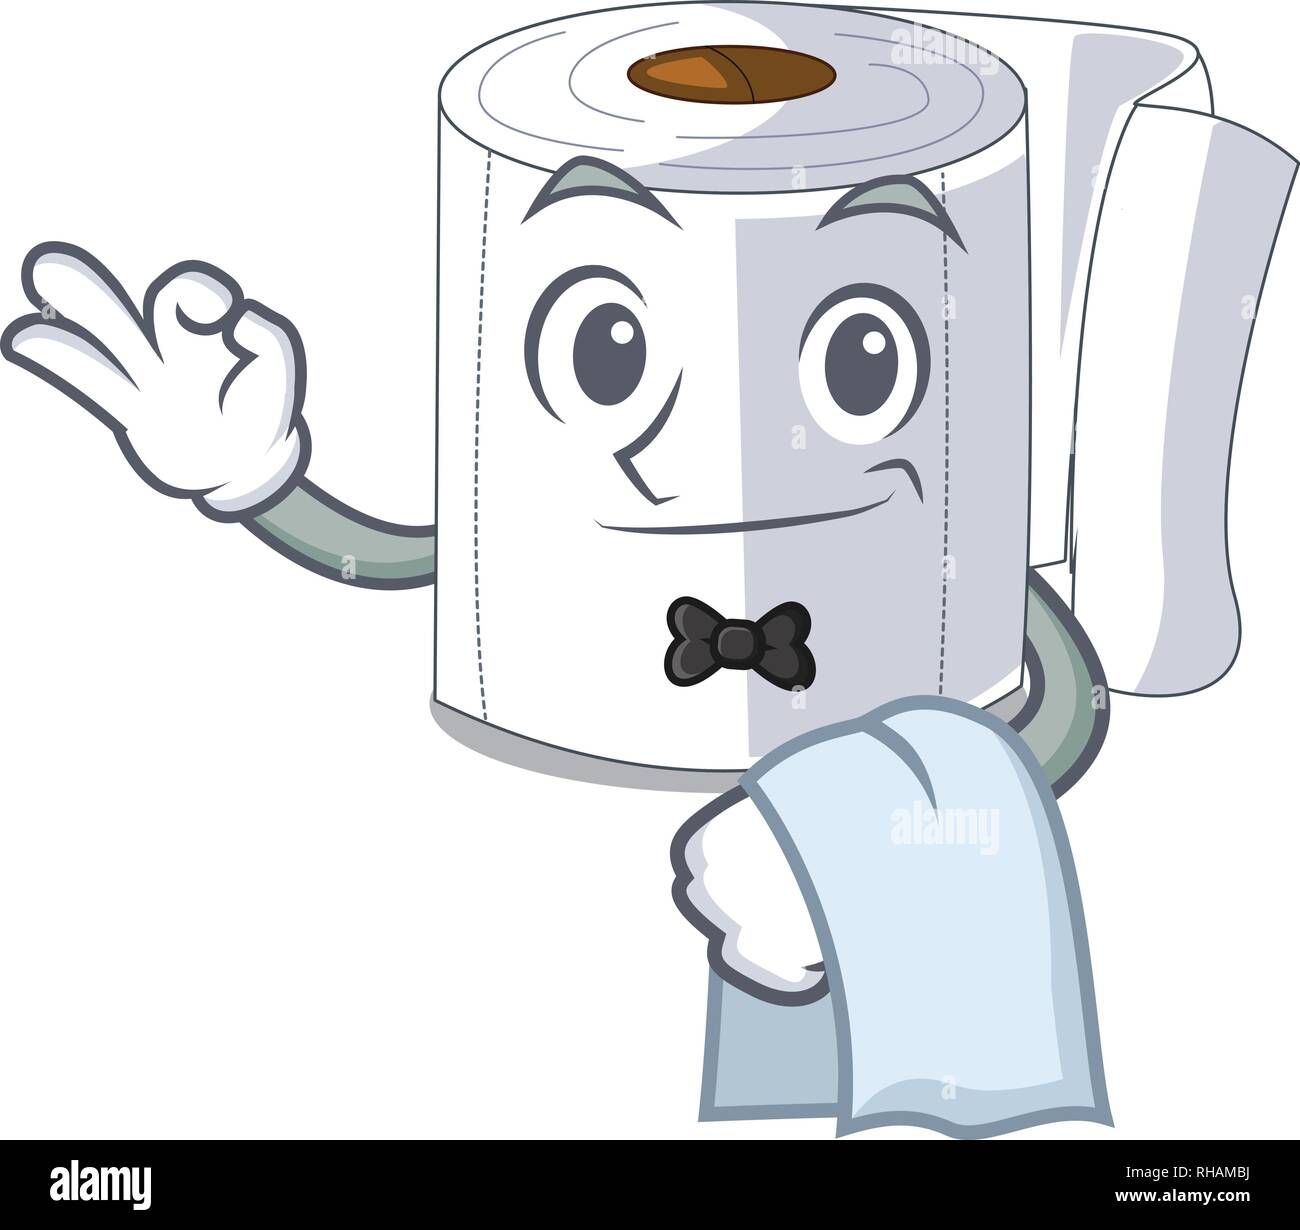 Waiter toilet paper in shape of mascot Stock Vector